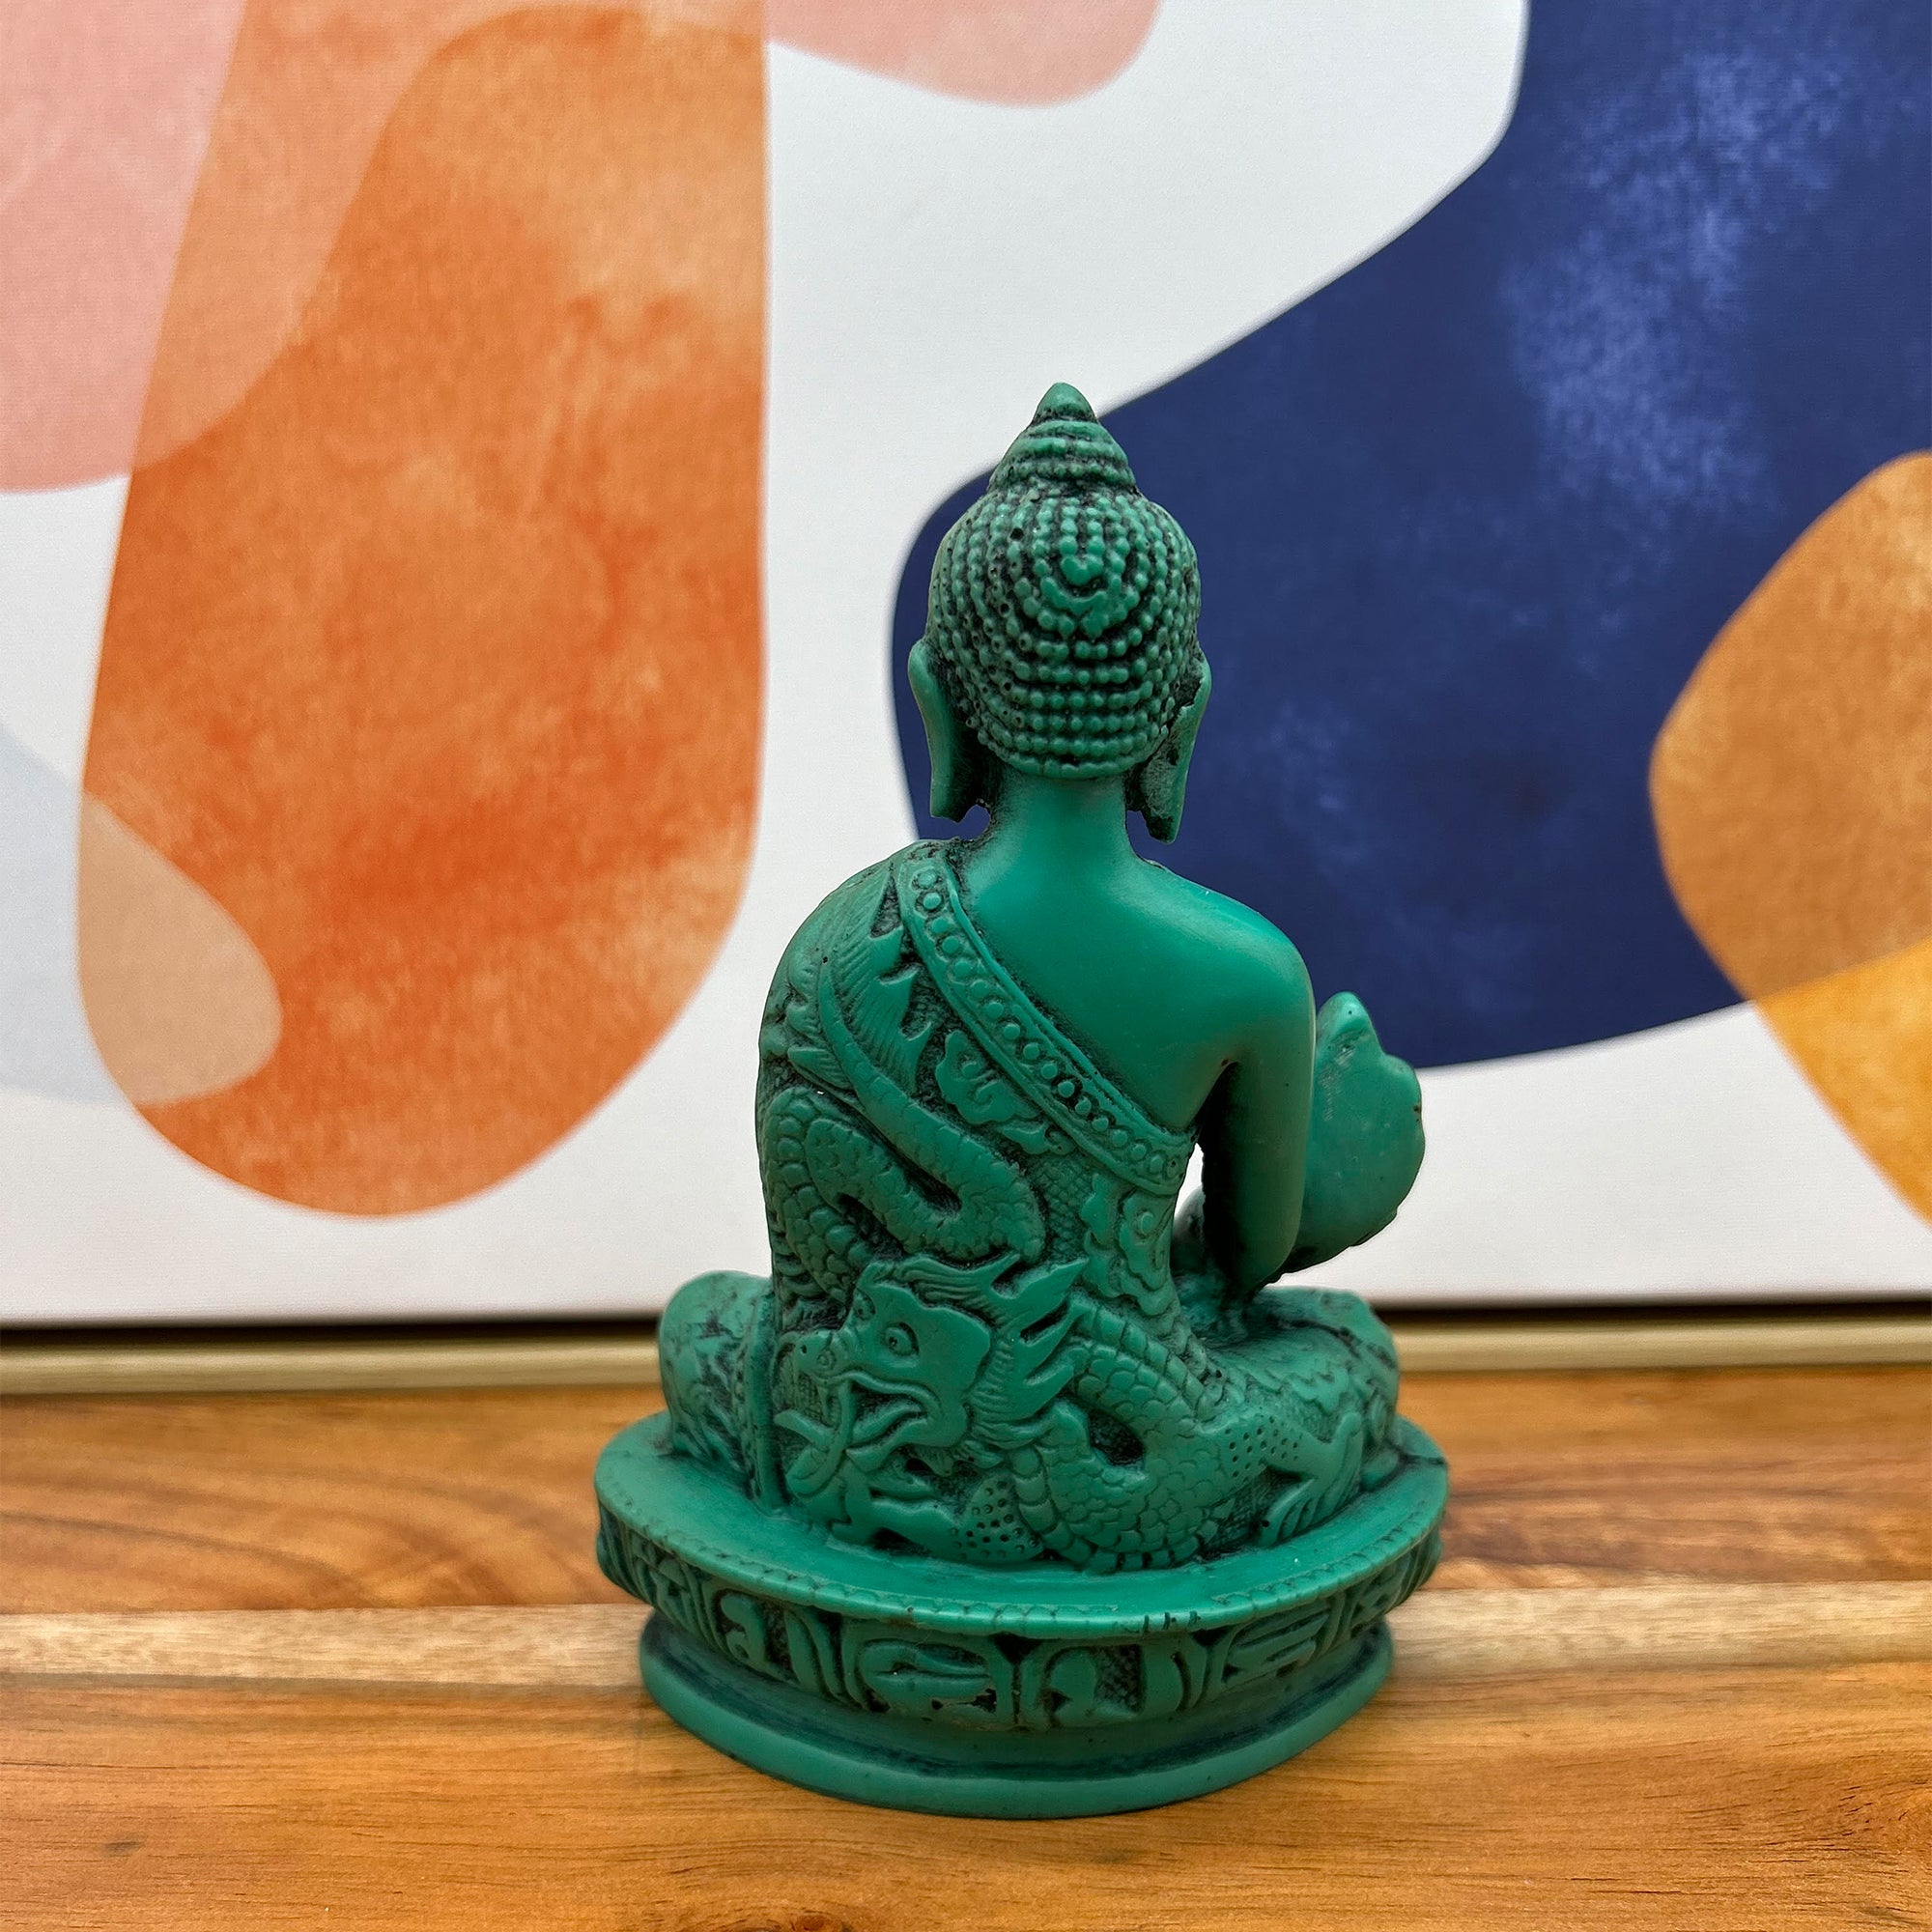 Green Buddha Statue